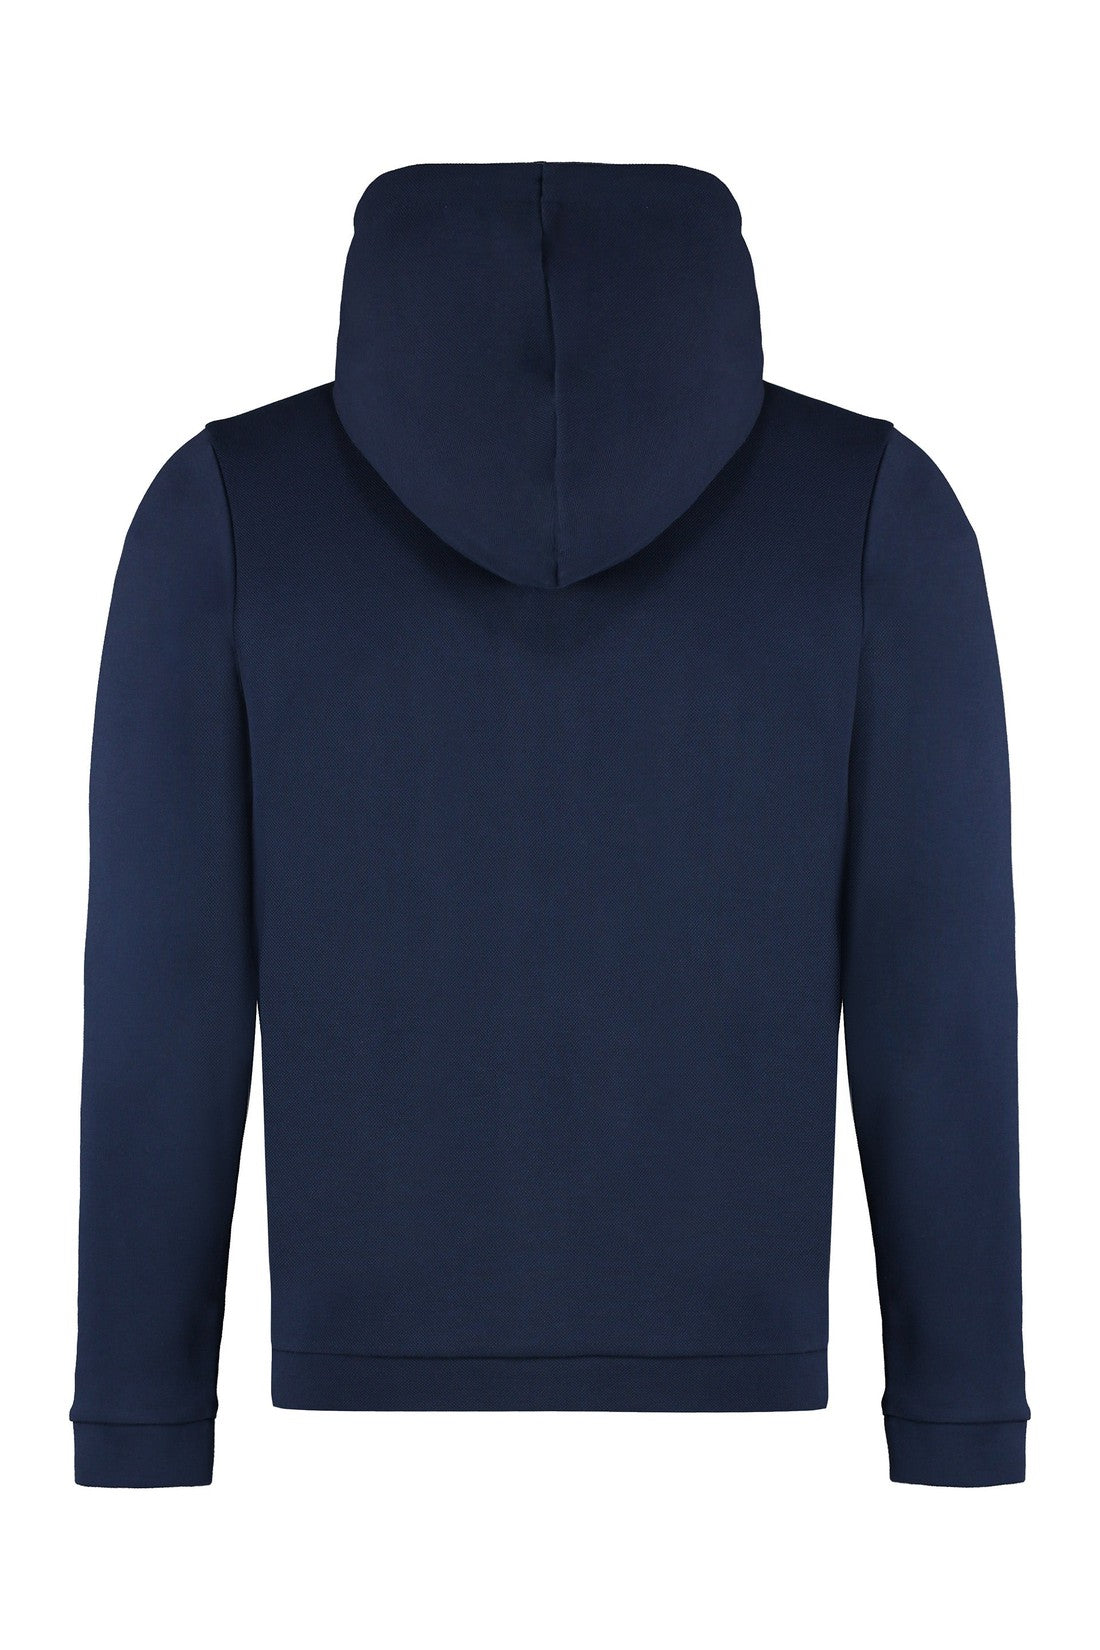 BOSS-OUTLET-SALE-Cotton full zip hoodie-ARCHIVIST